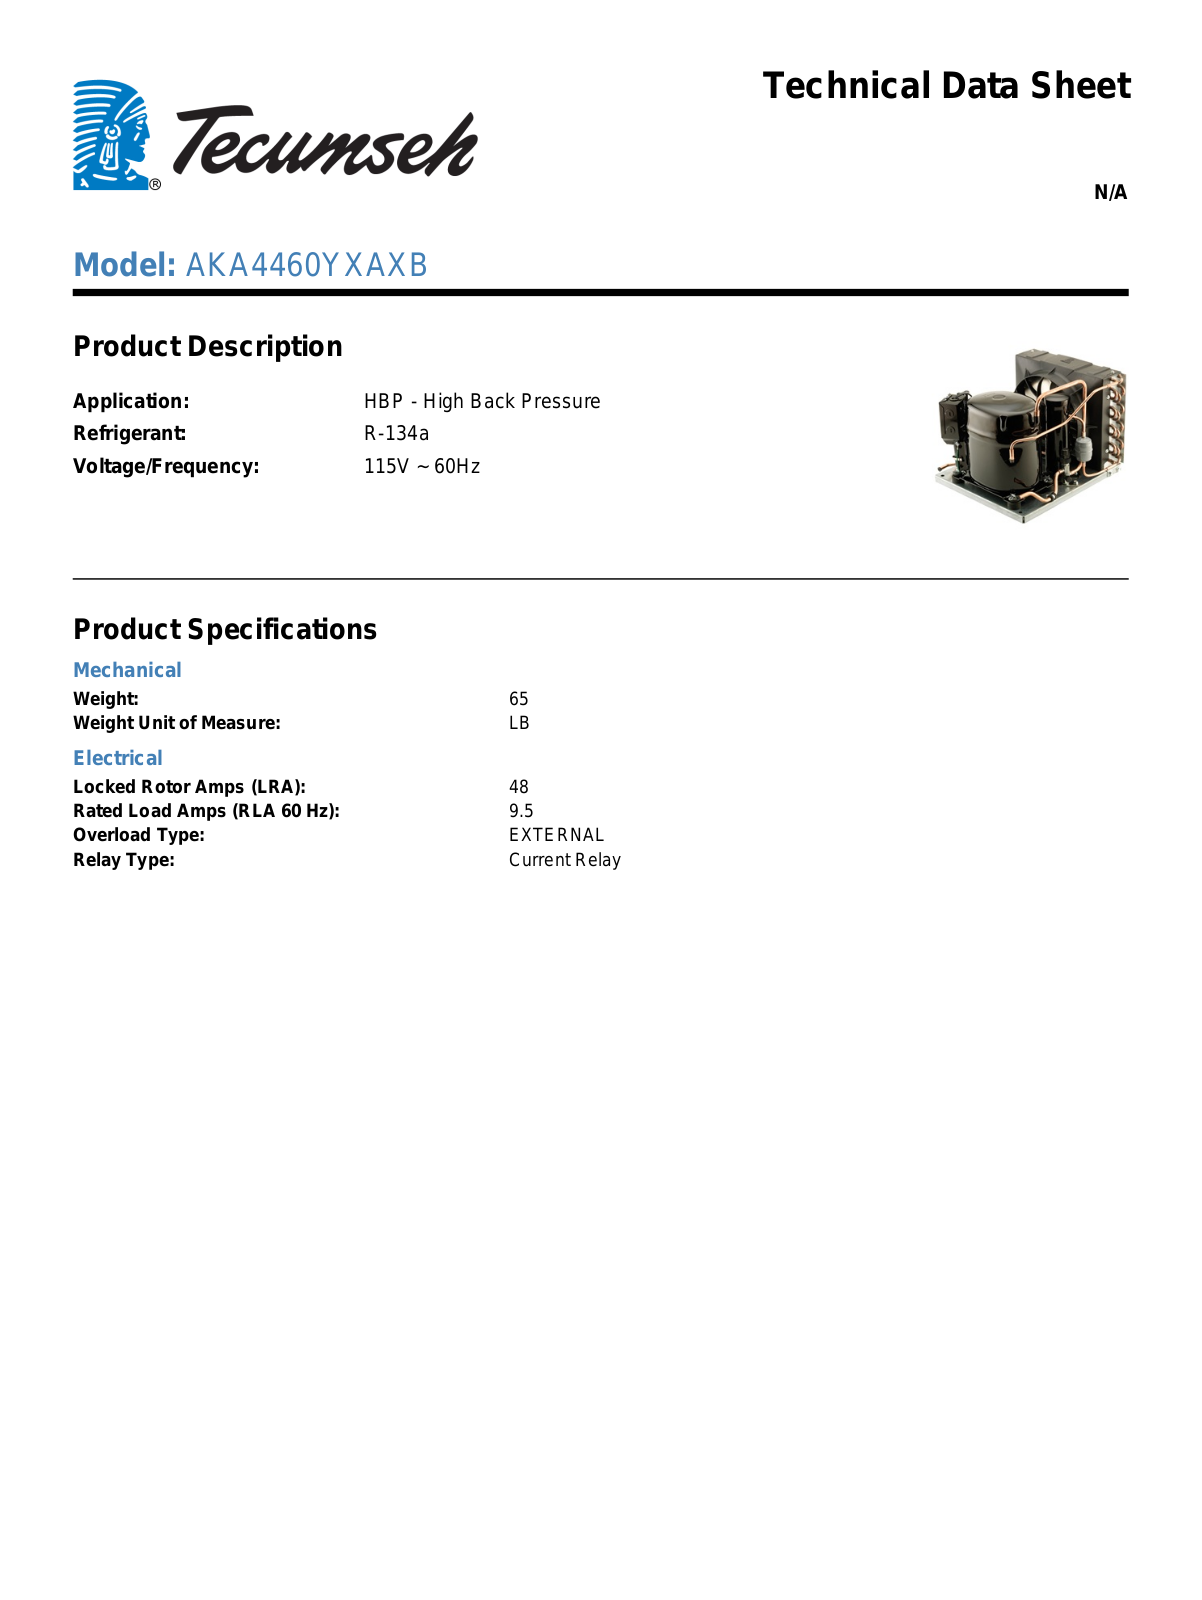 Tecumseh AKA4460YXAXB Technical Data Sheet